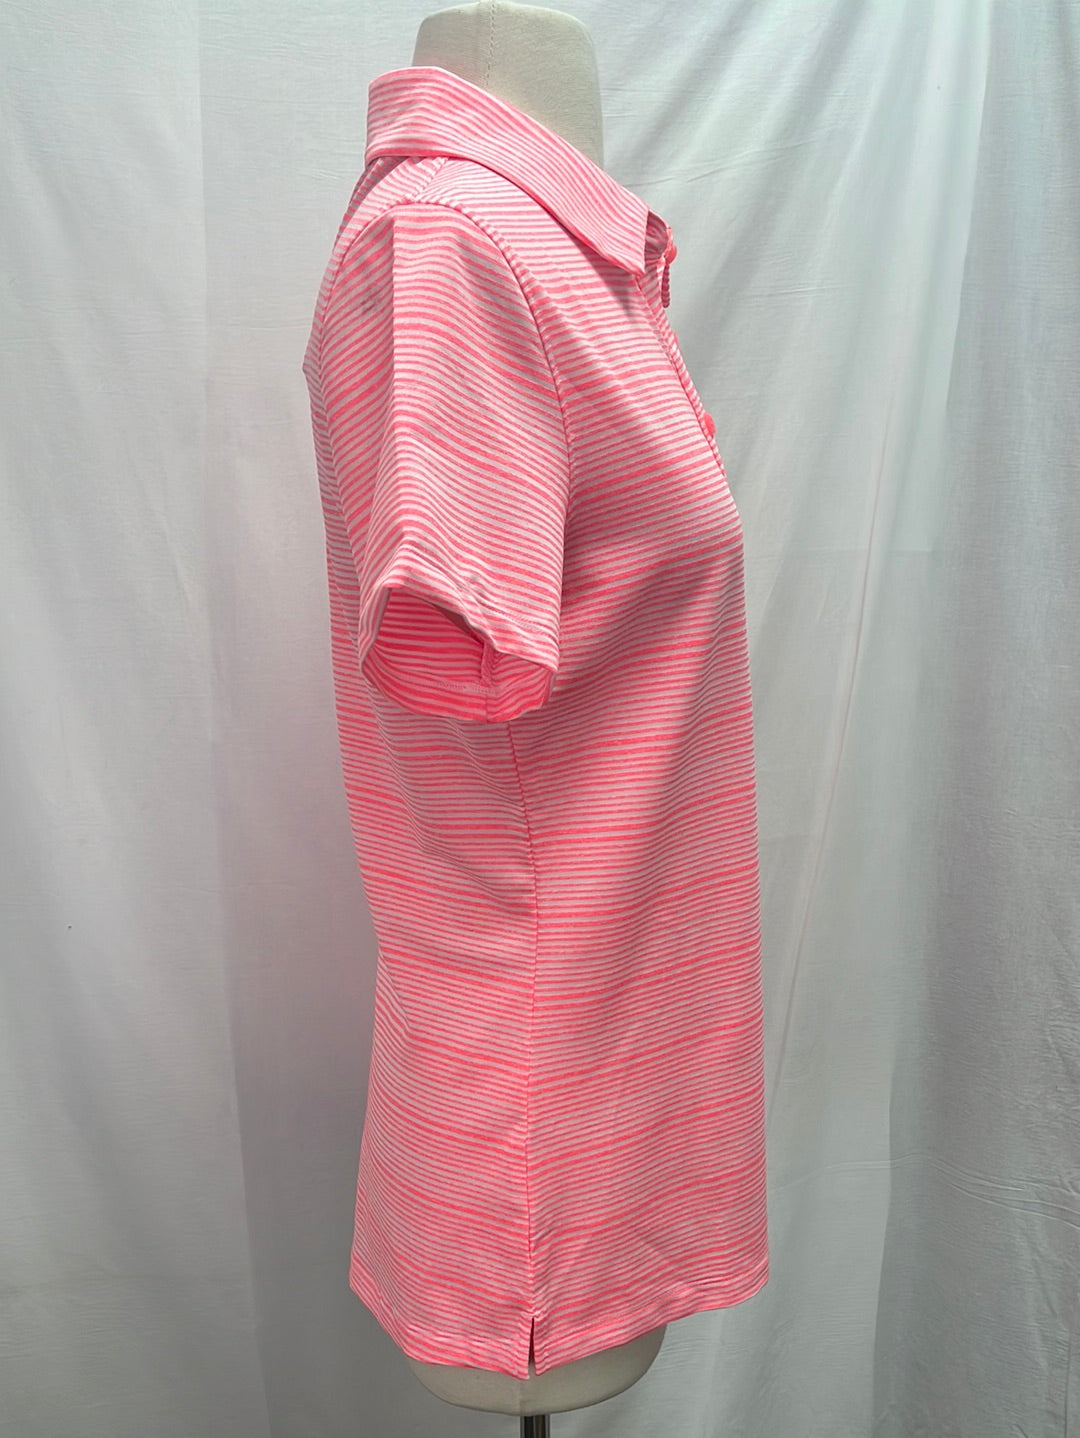 NWT -- Under Armour 5-Button Women's Pink + White Golf Polo Shirt -- M